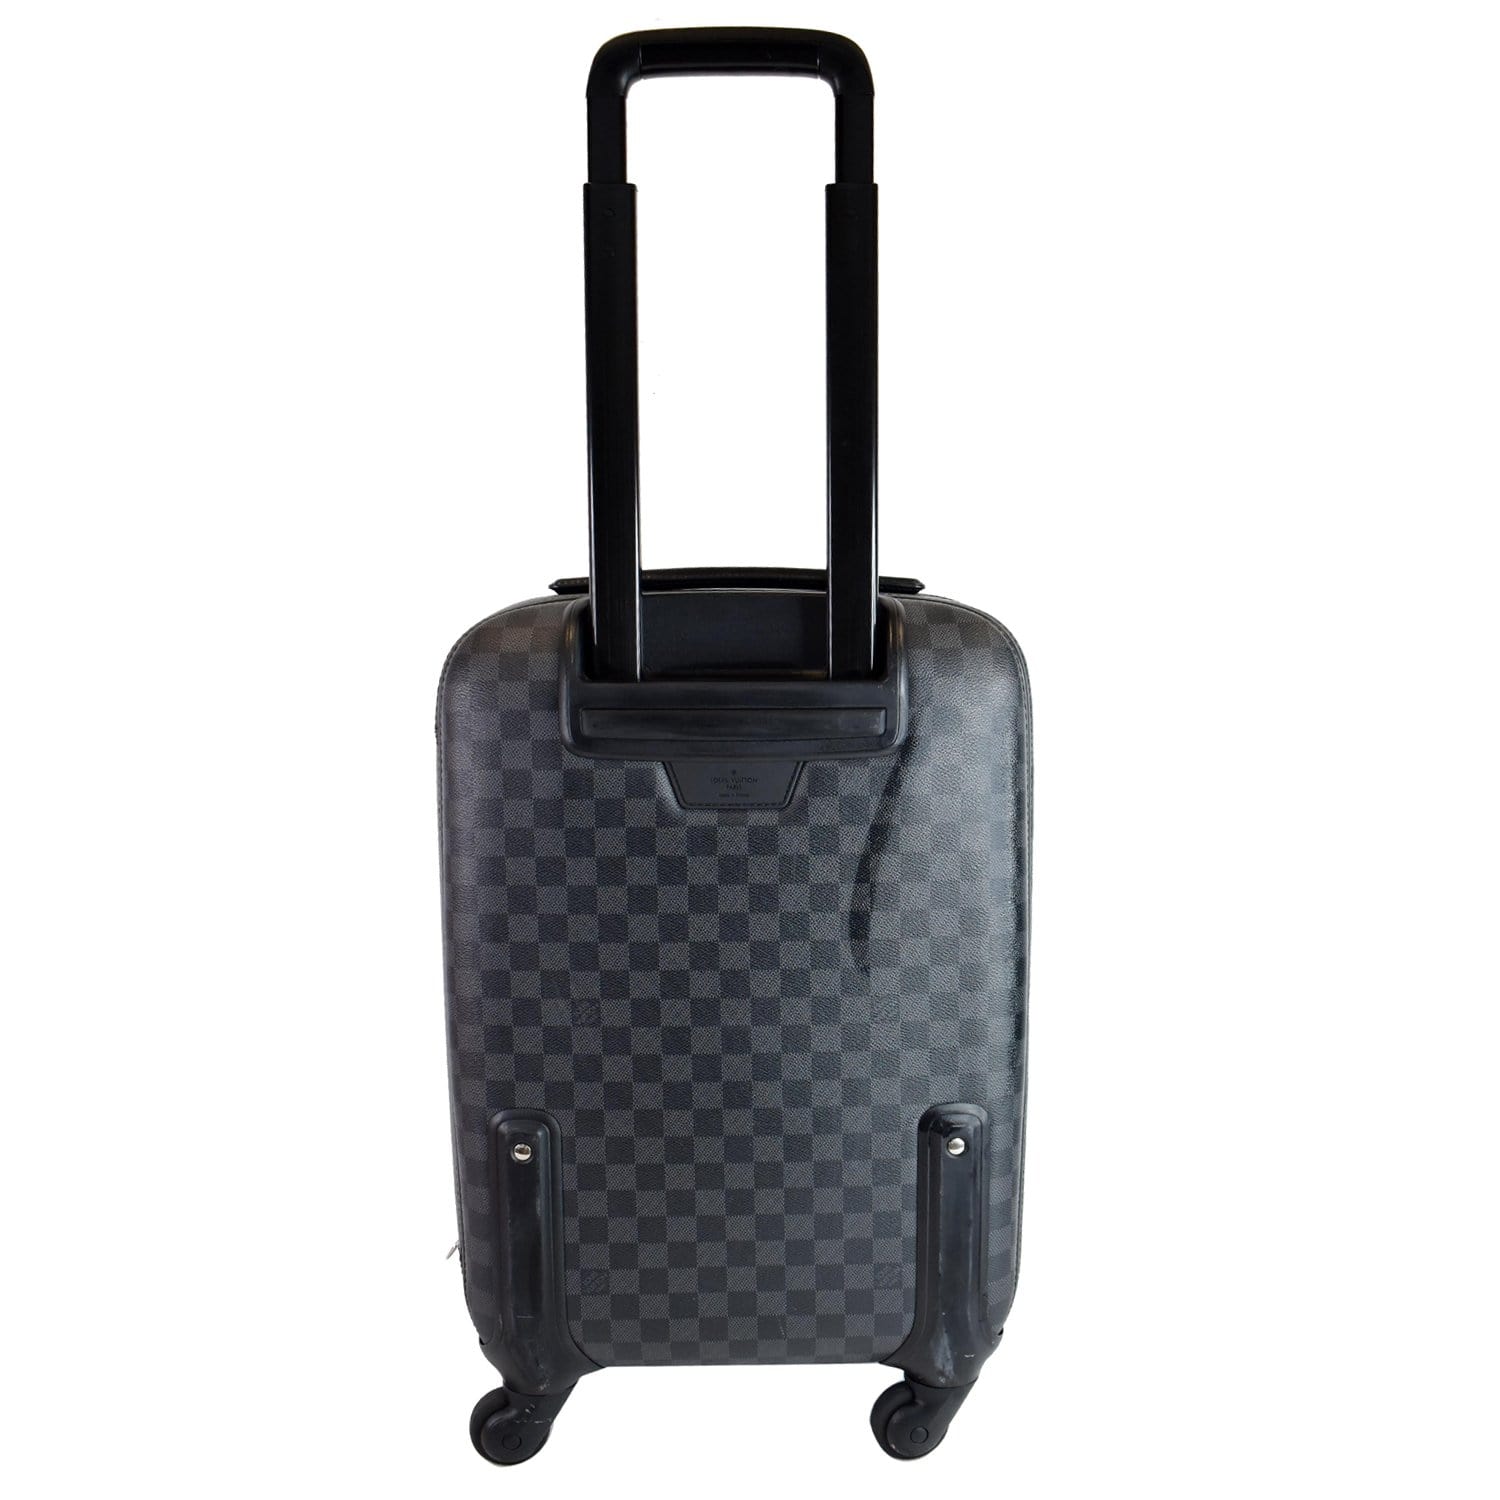 Louis Vuitton suitcase - Bagage Collection